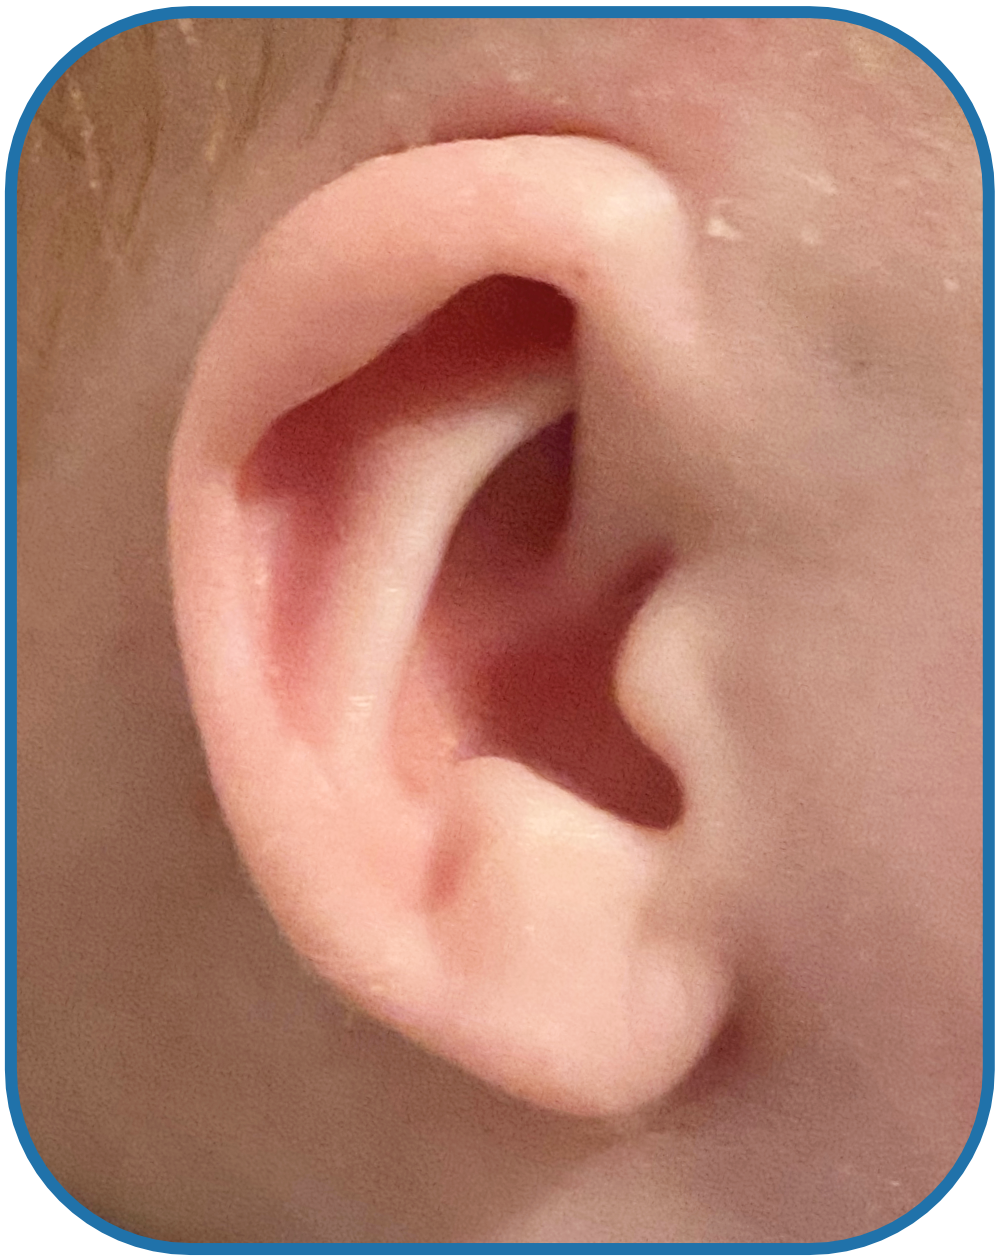 Cryptotia ear solution baby